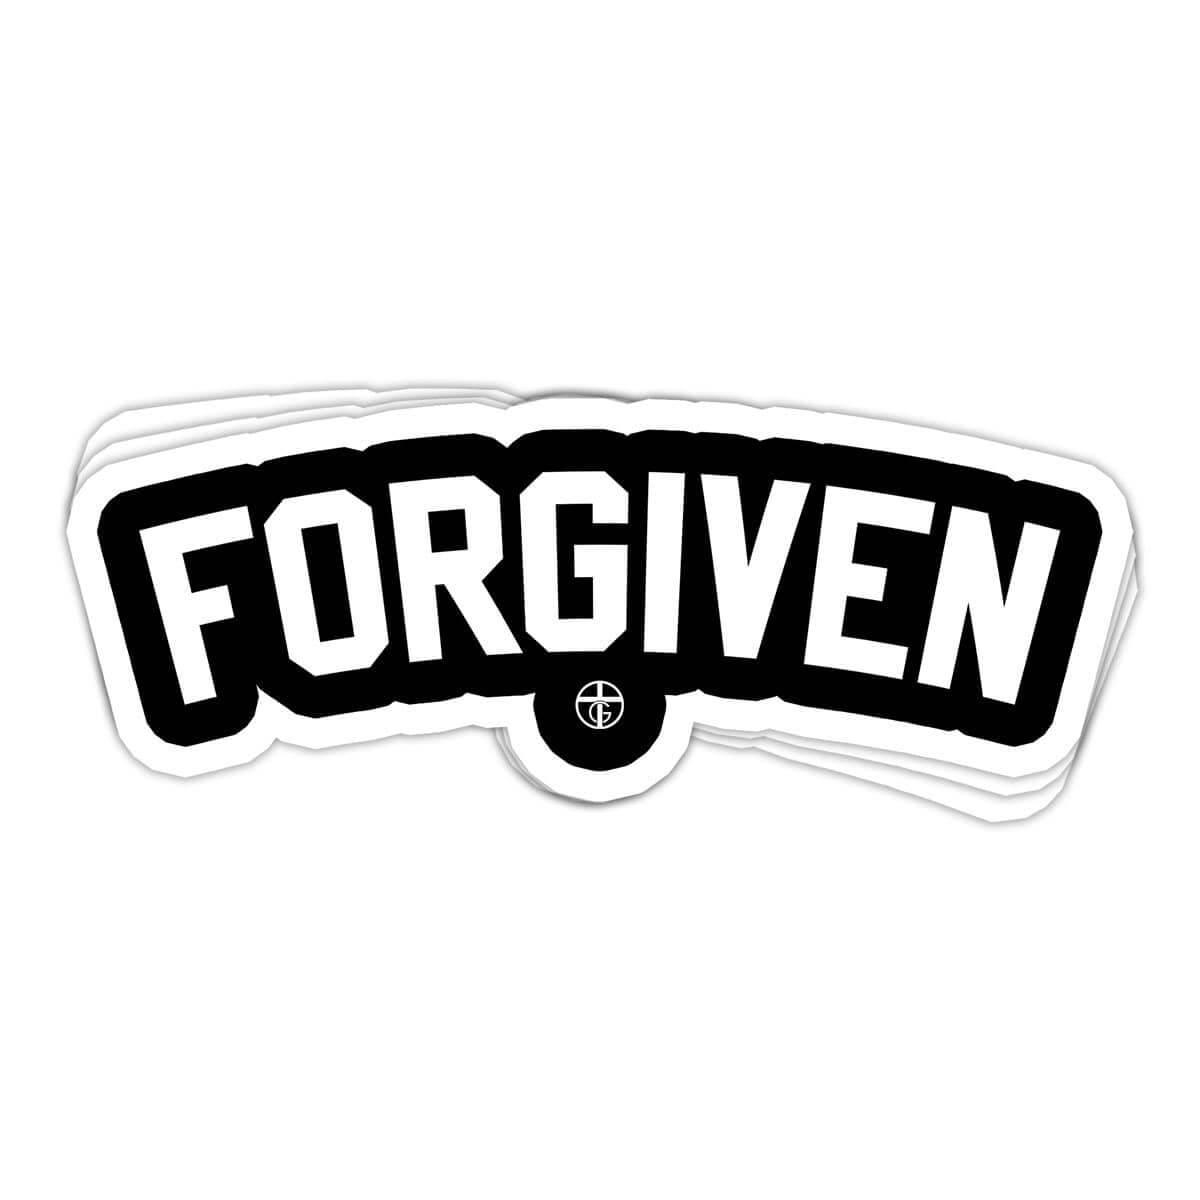 Forgiven Decals - Our True God